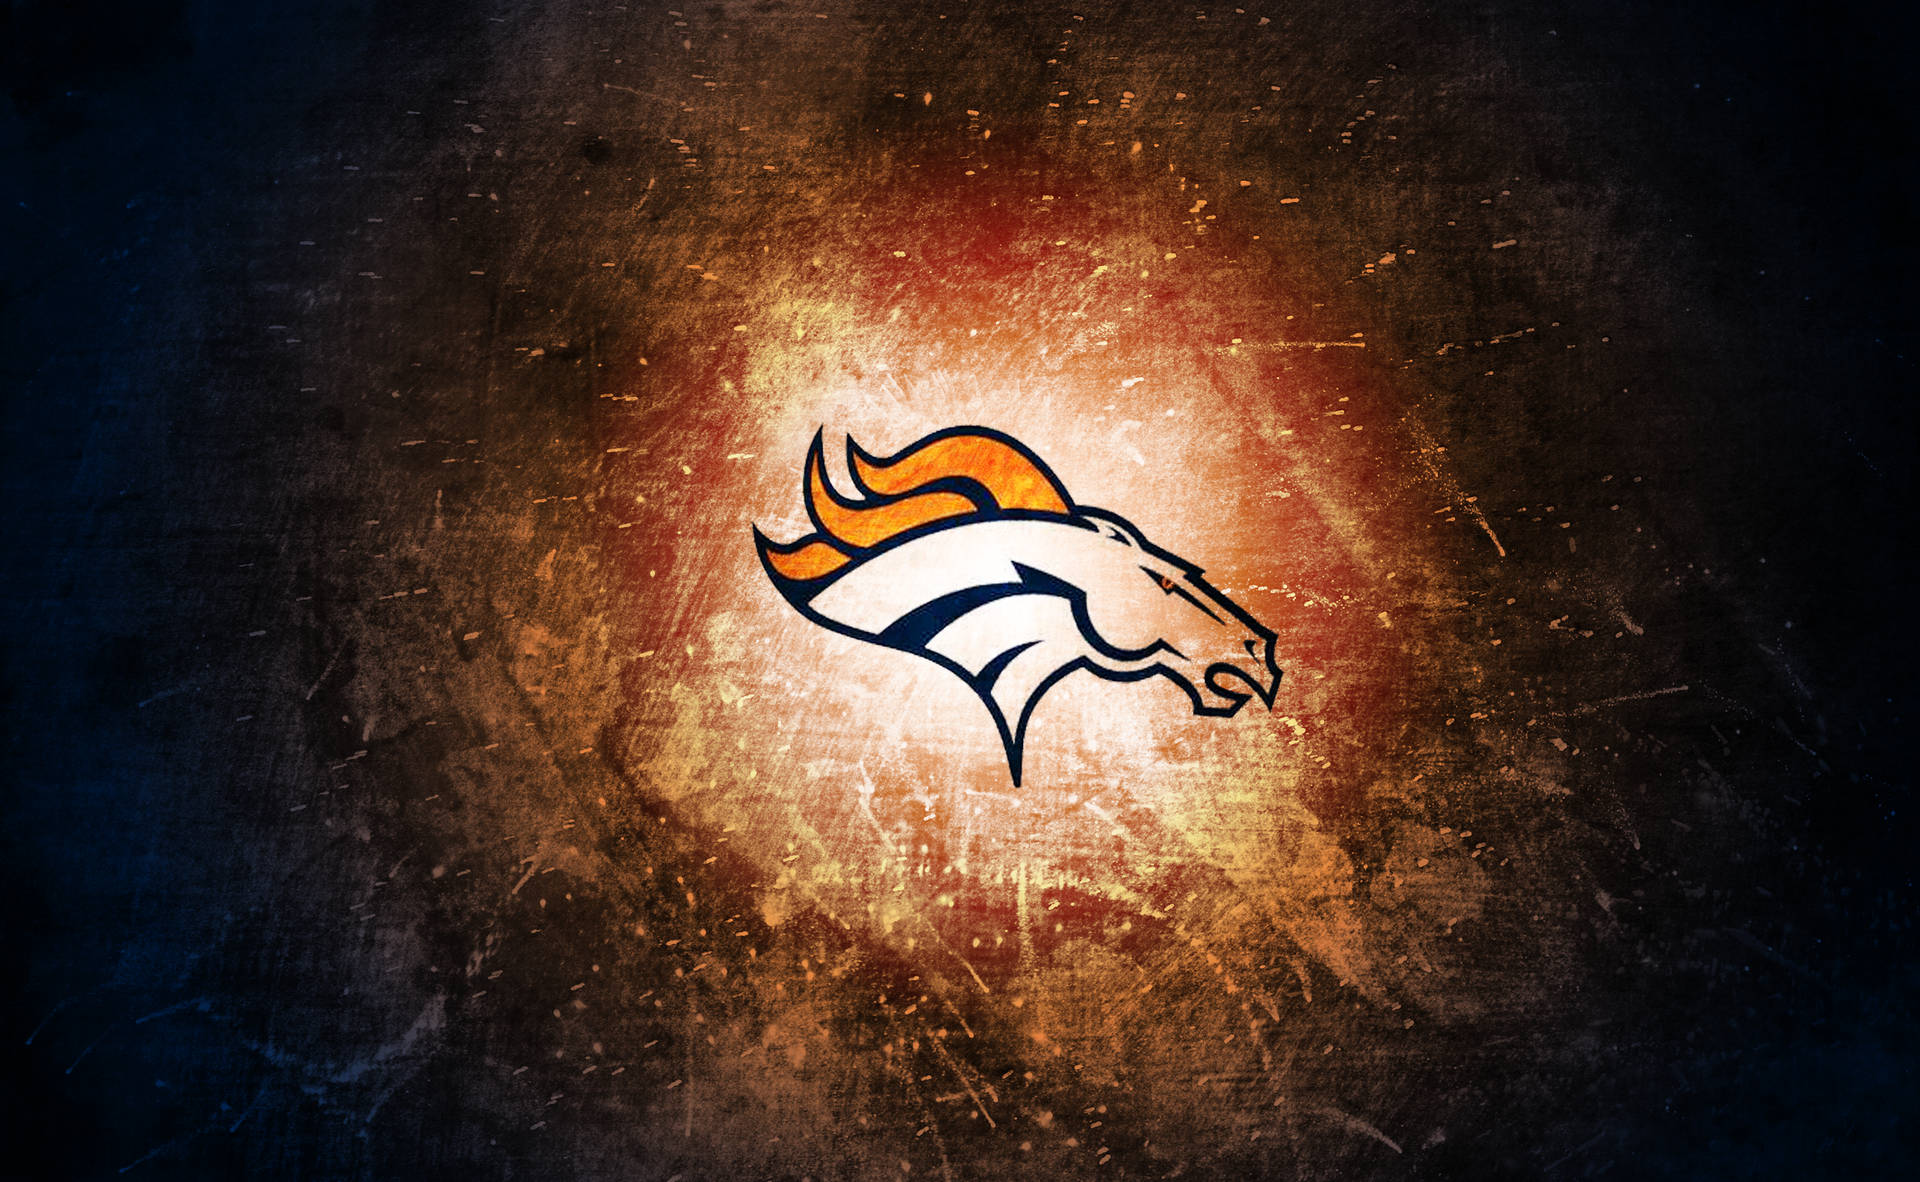 Denver Broncos 3900X2400 Wallpaper and Background Image